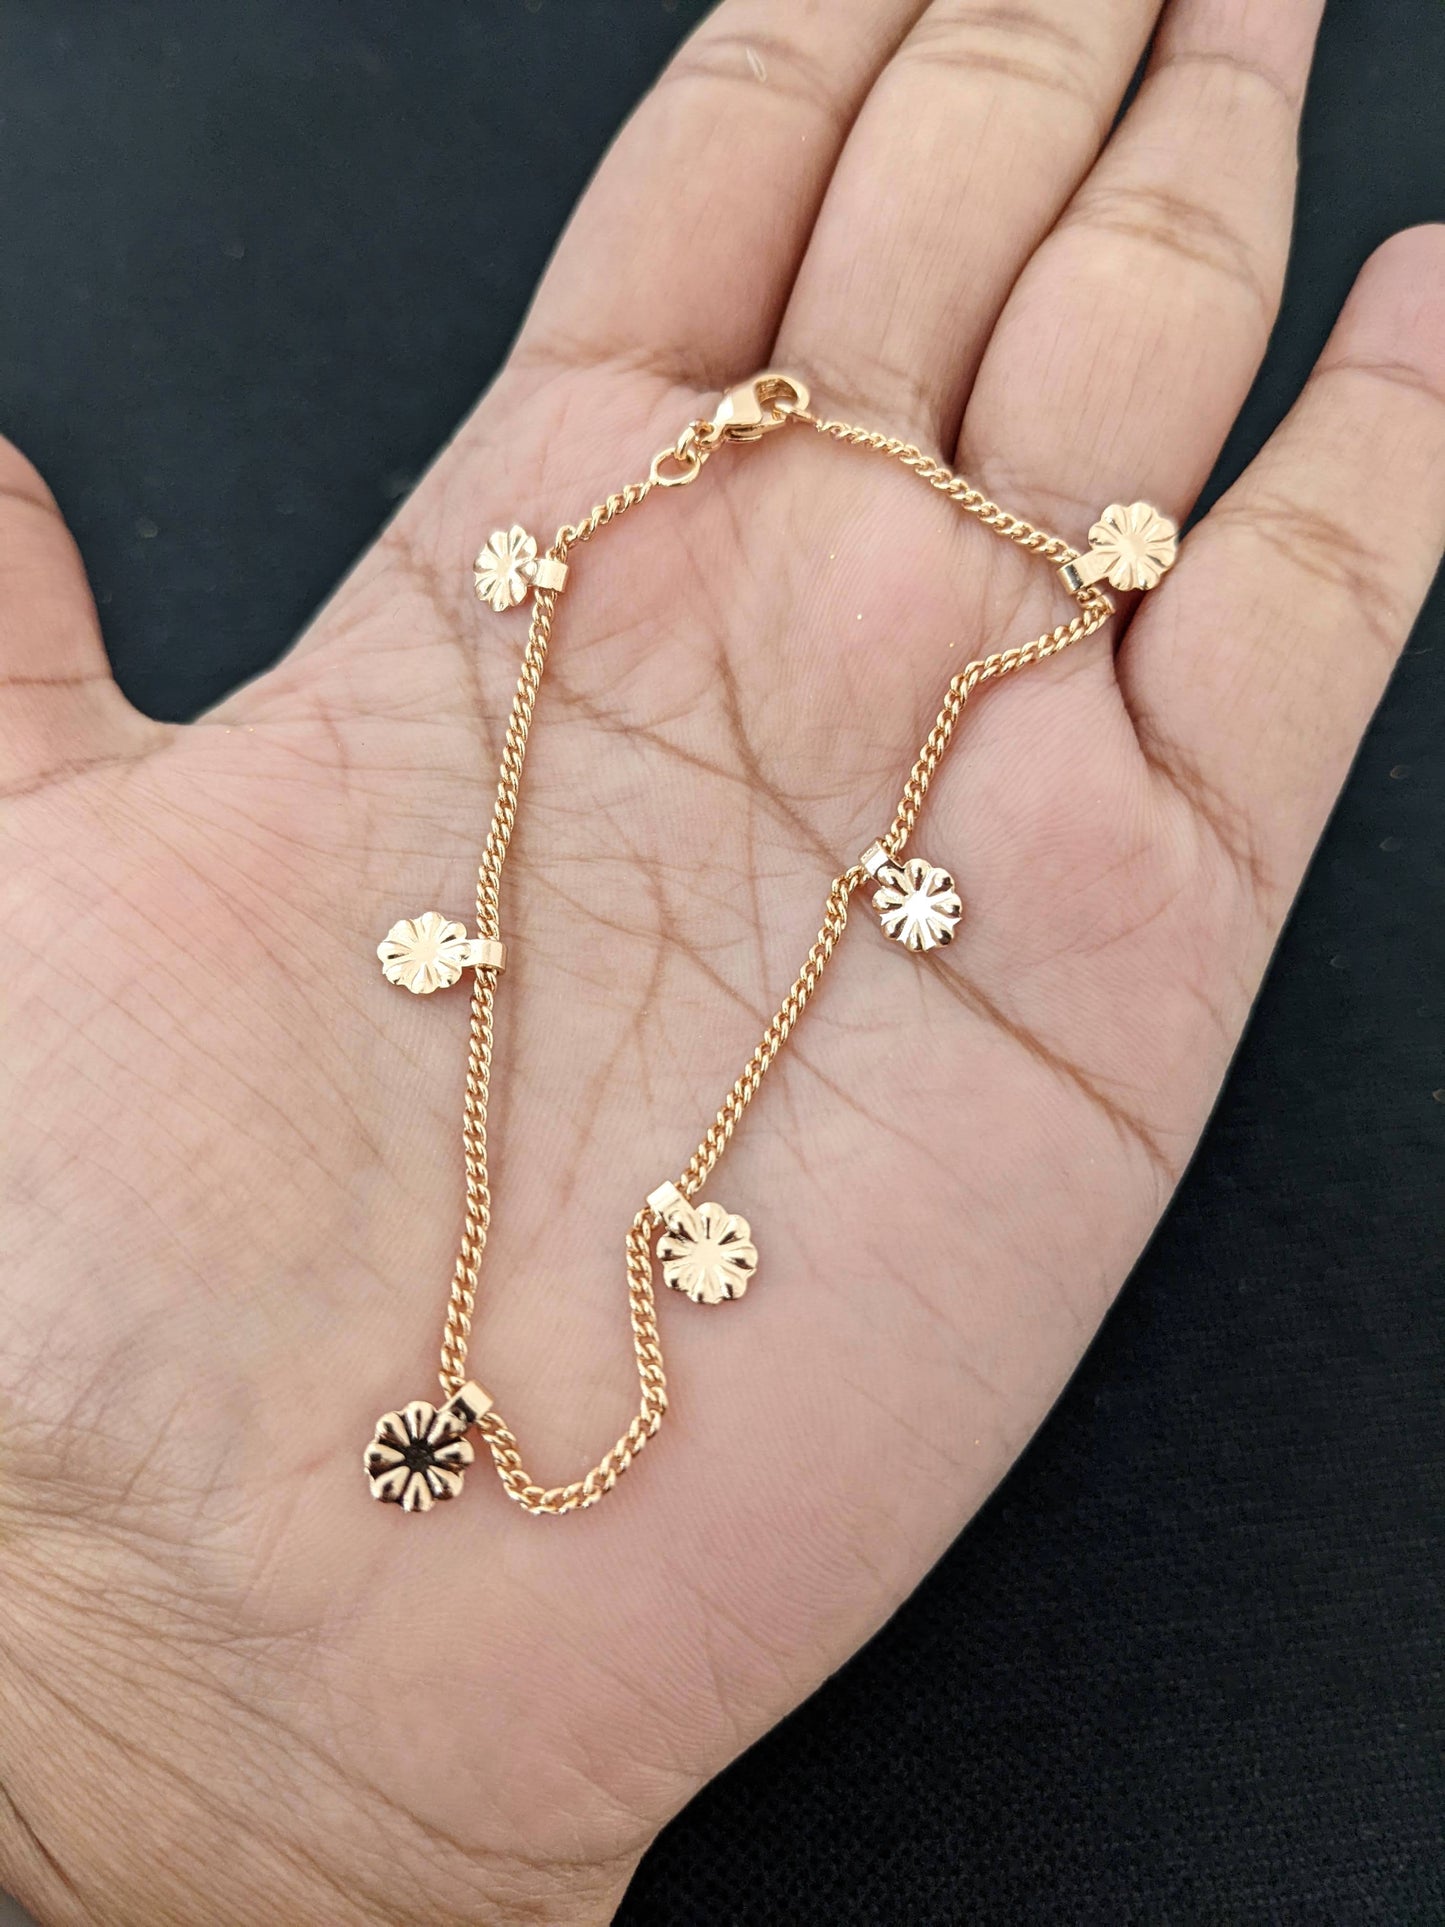 Flower charm dangling chain Bracelet